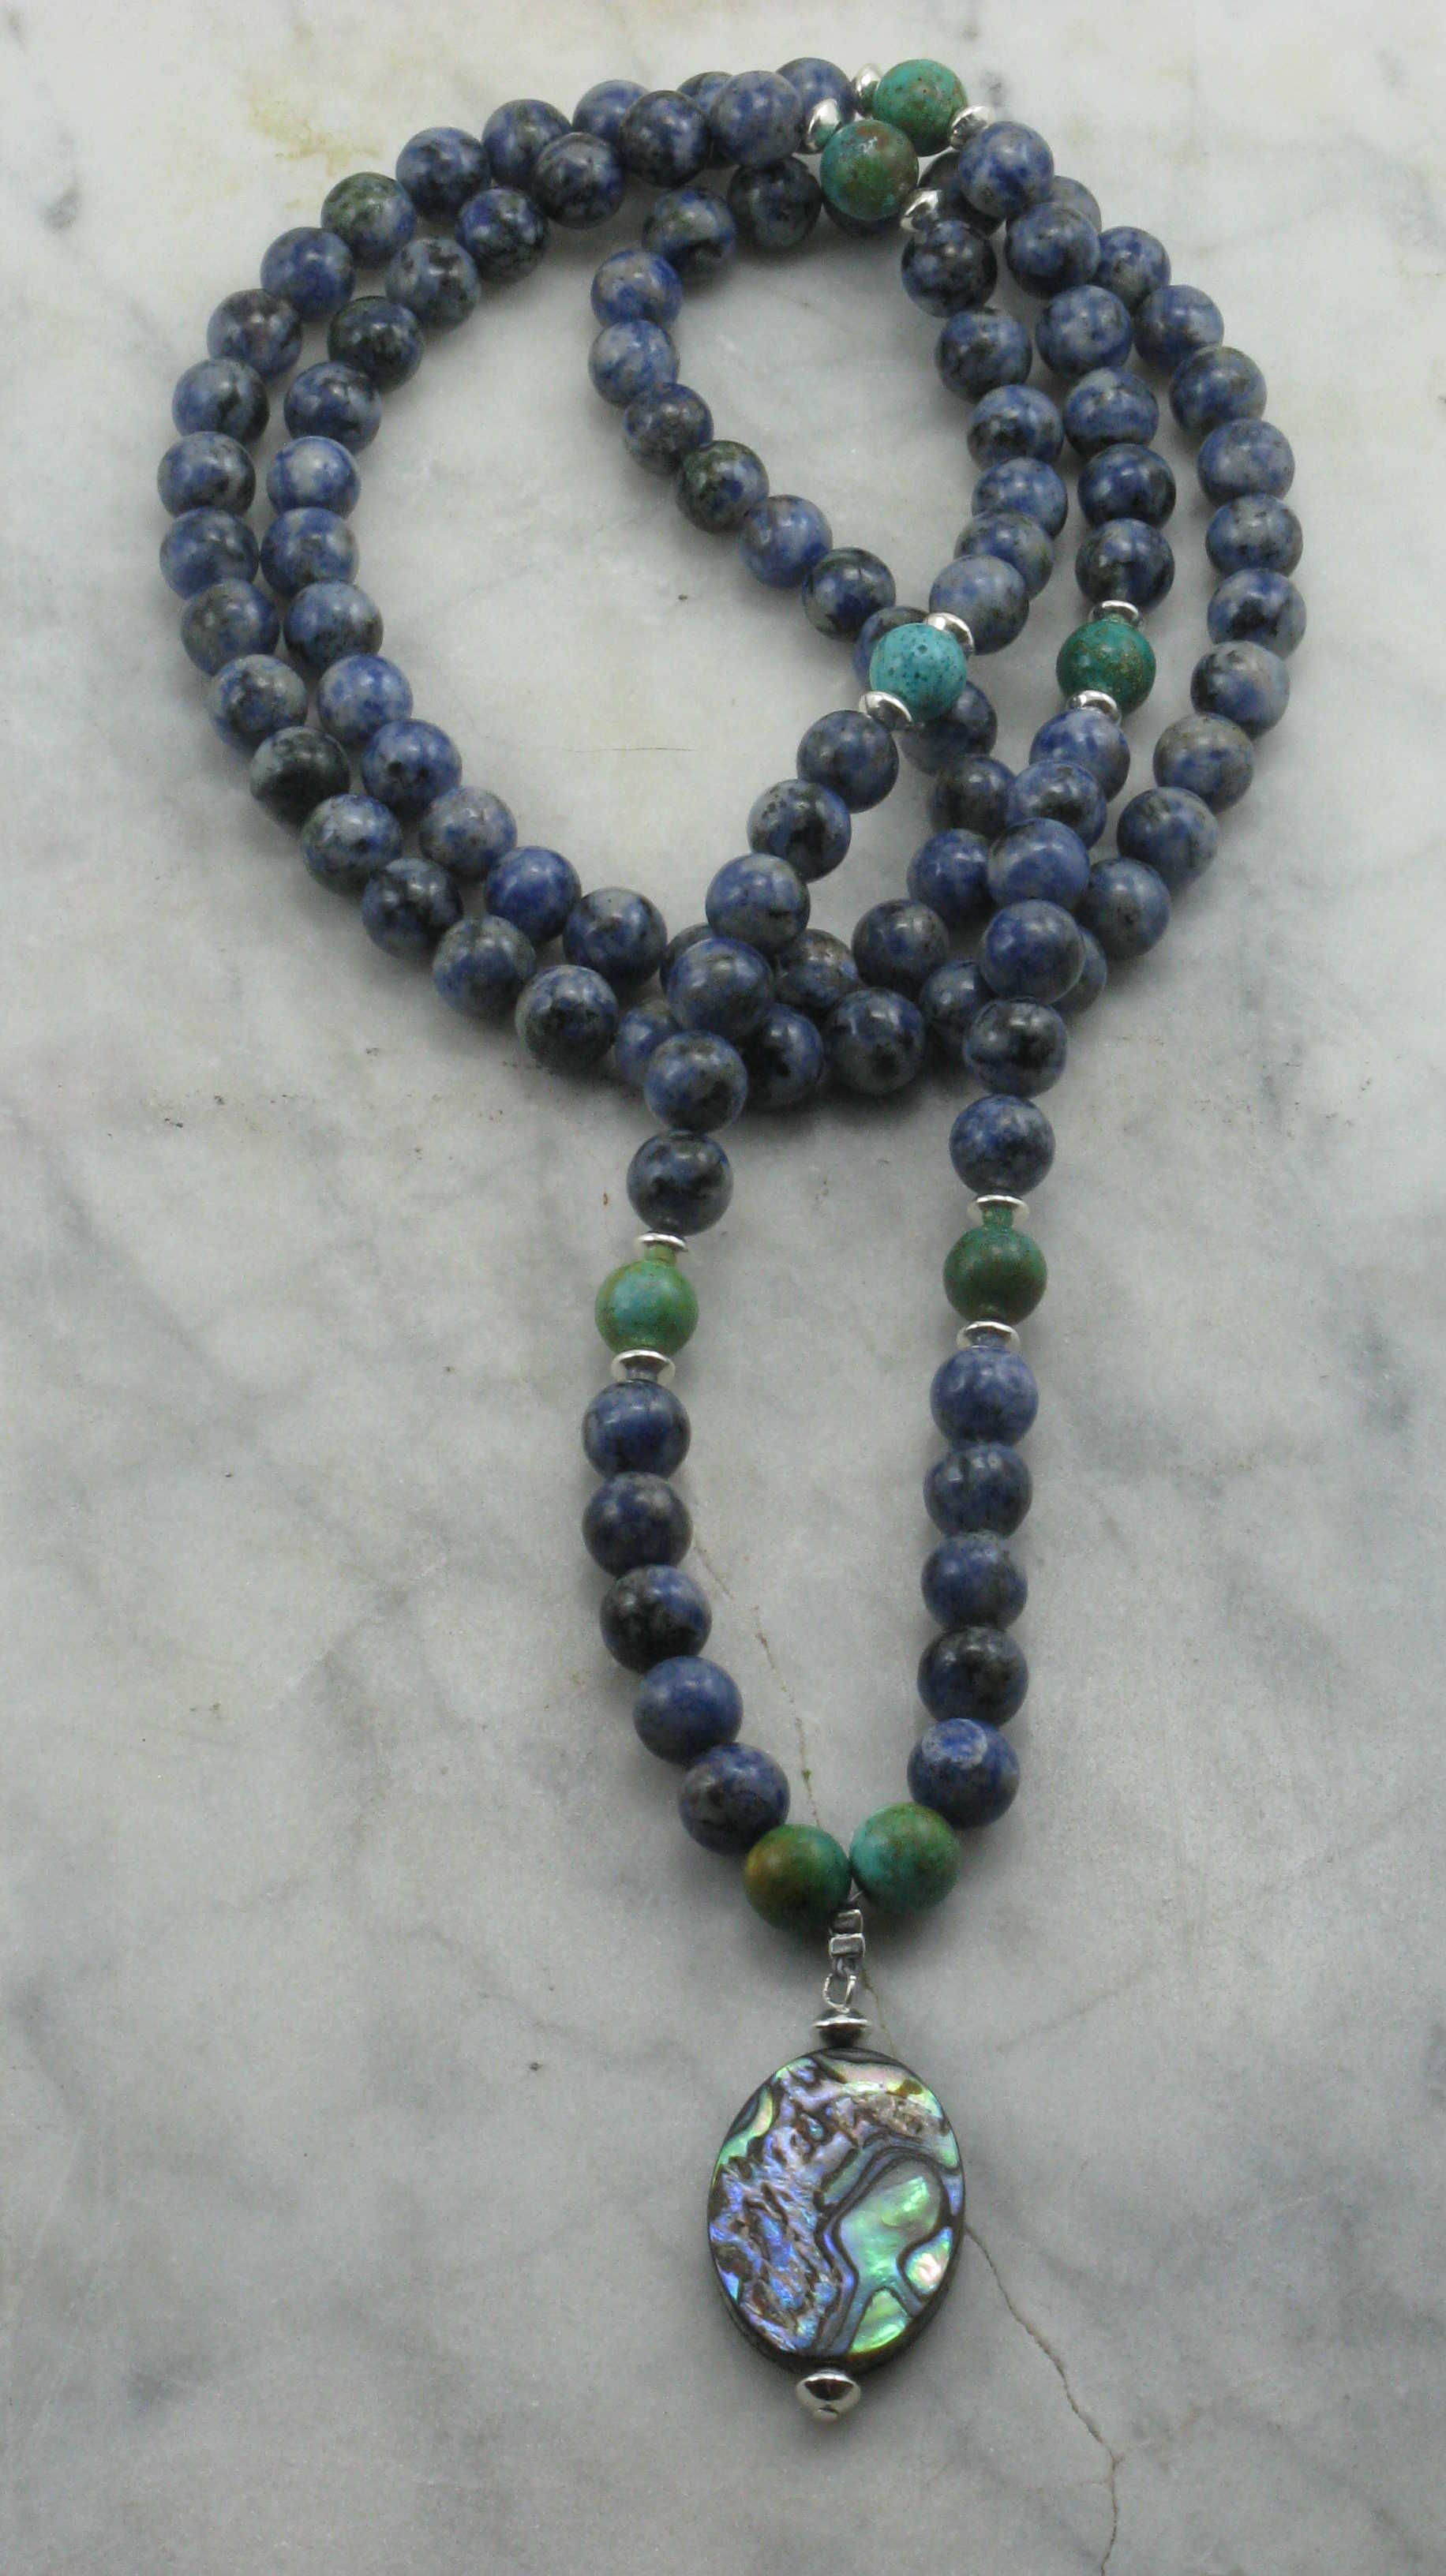 necklace of prayer beads